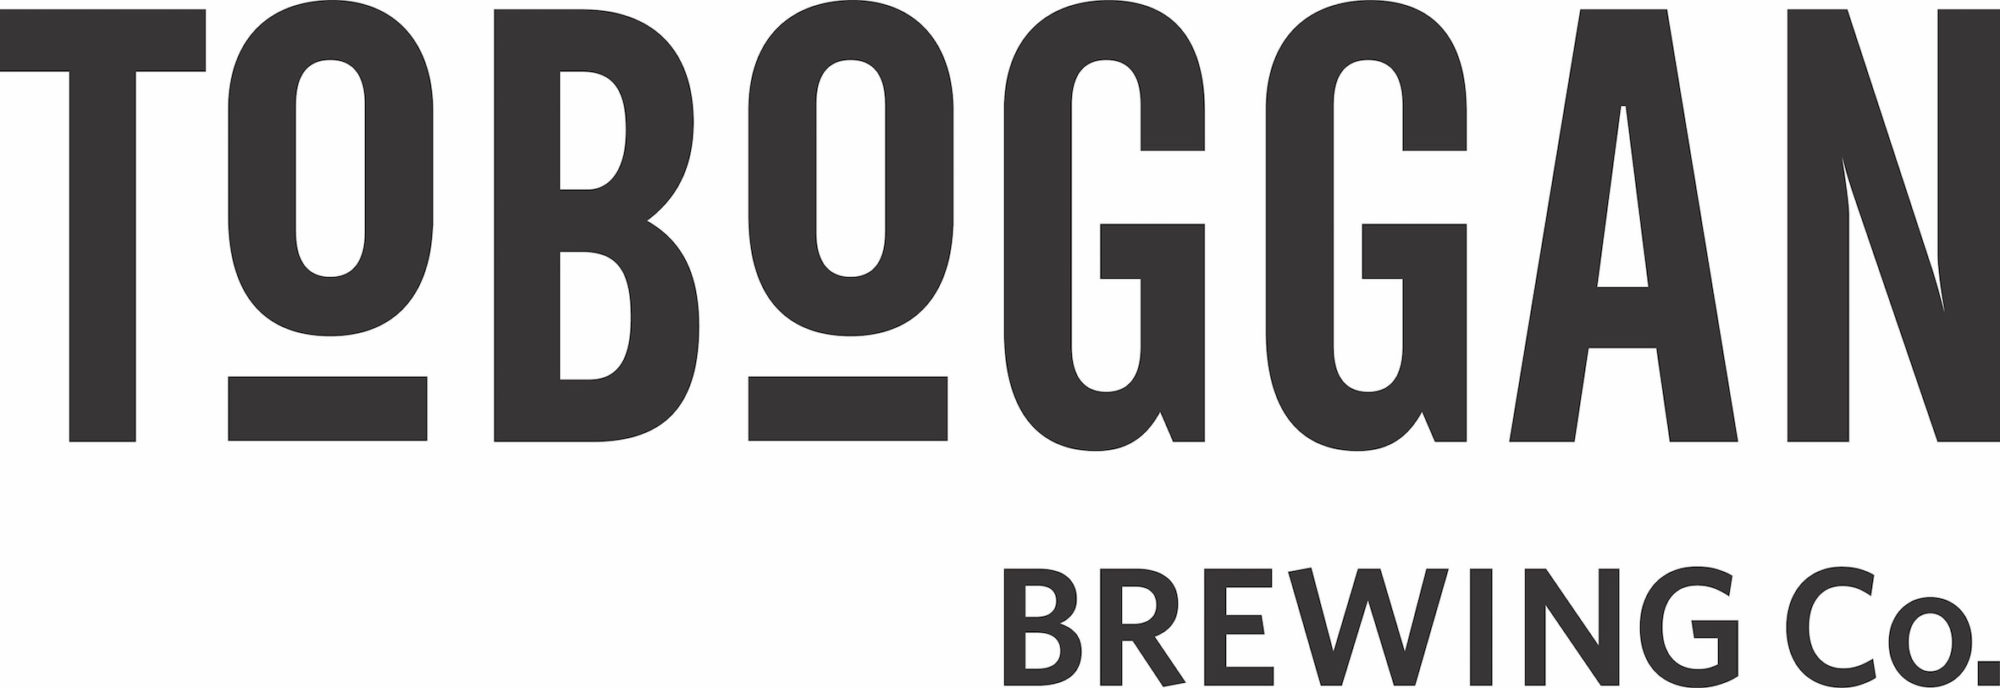 toboggan brewing company logo with black writing